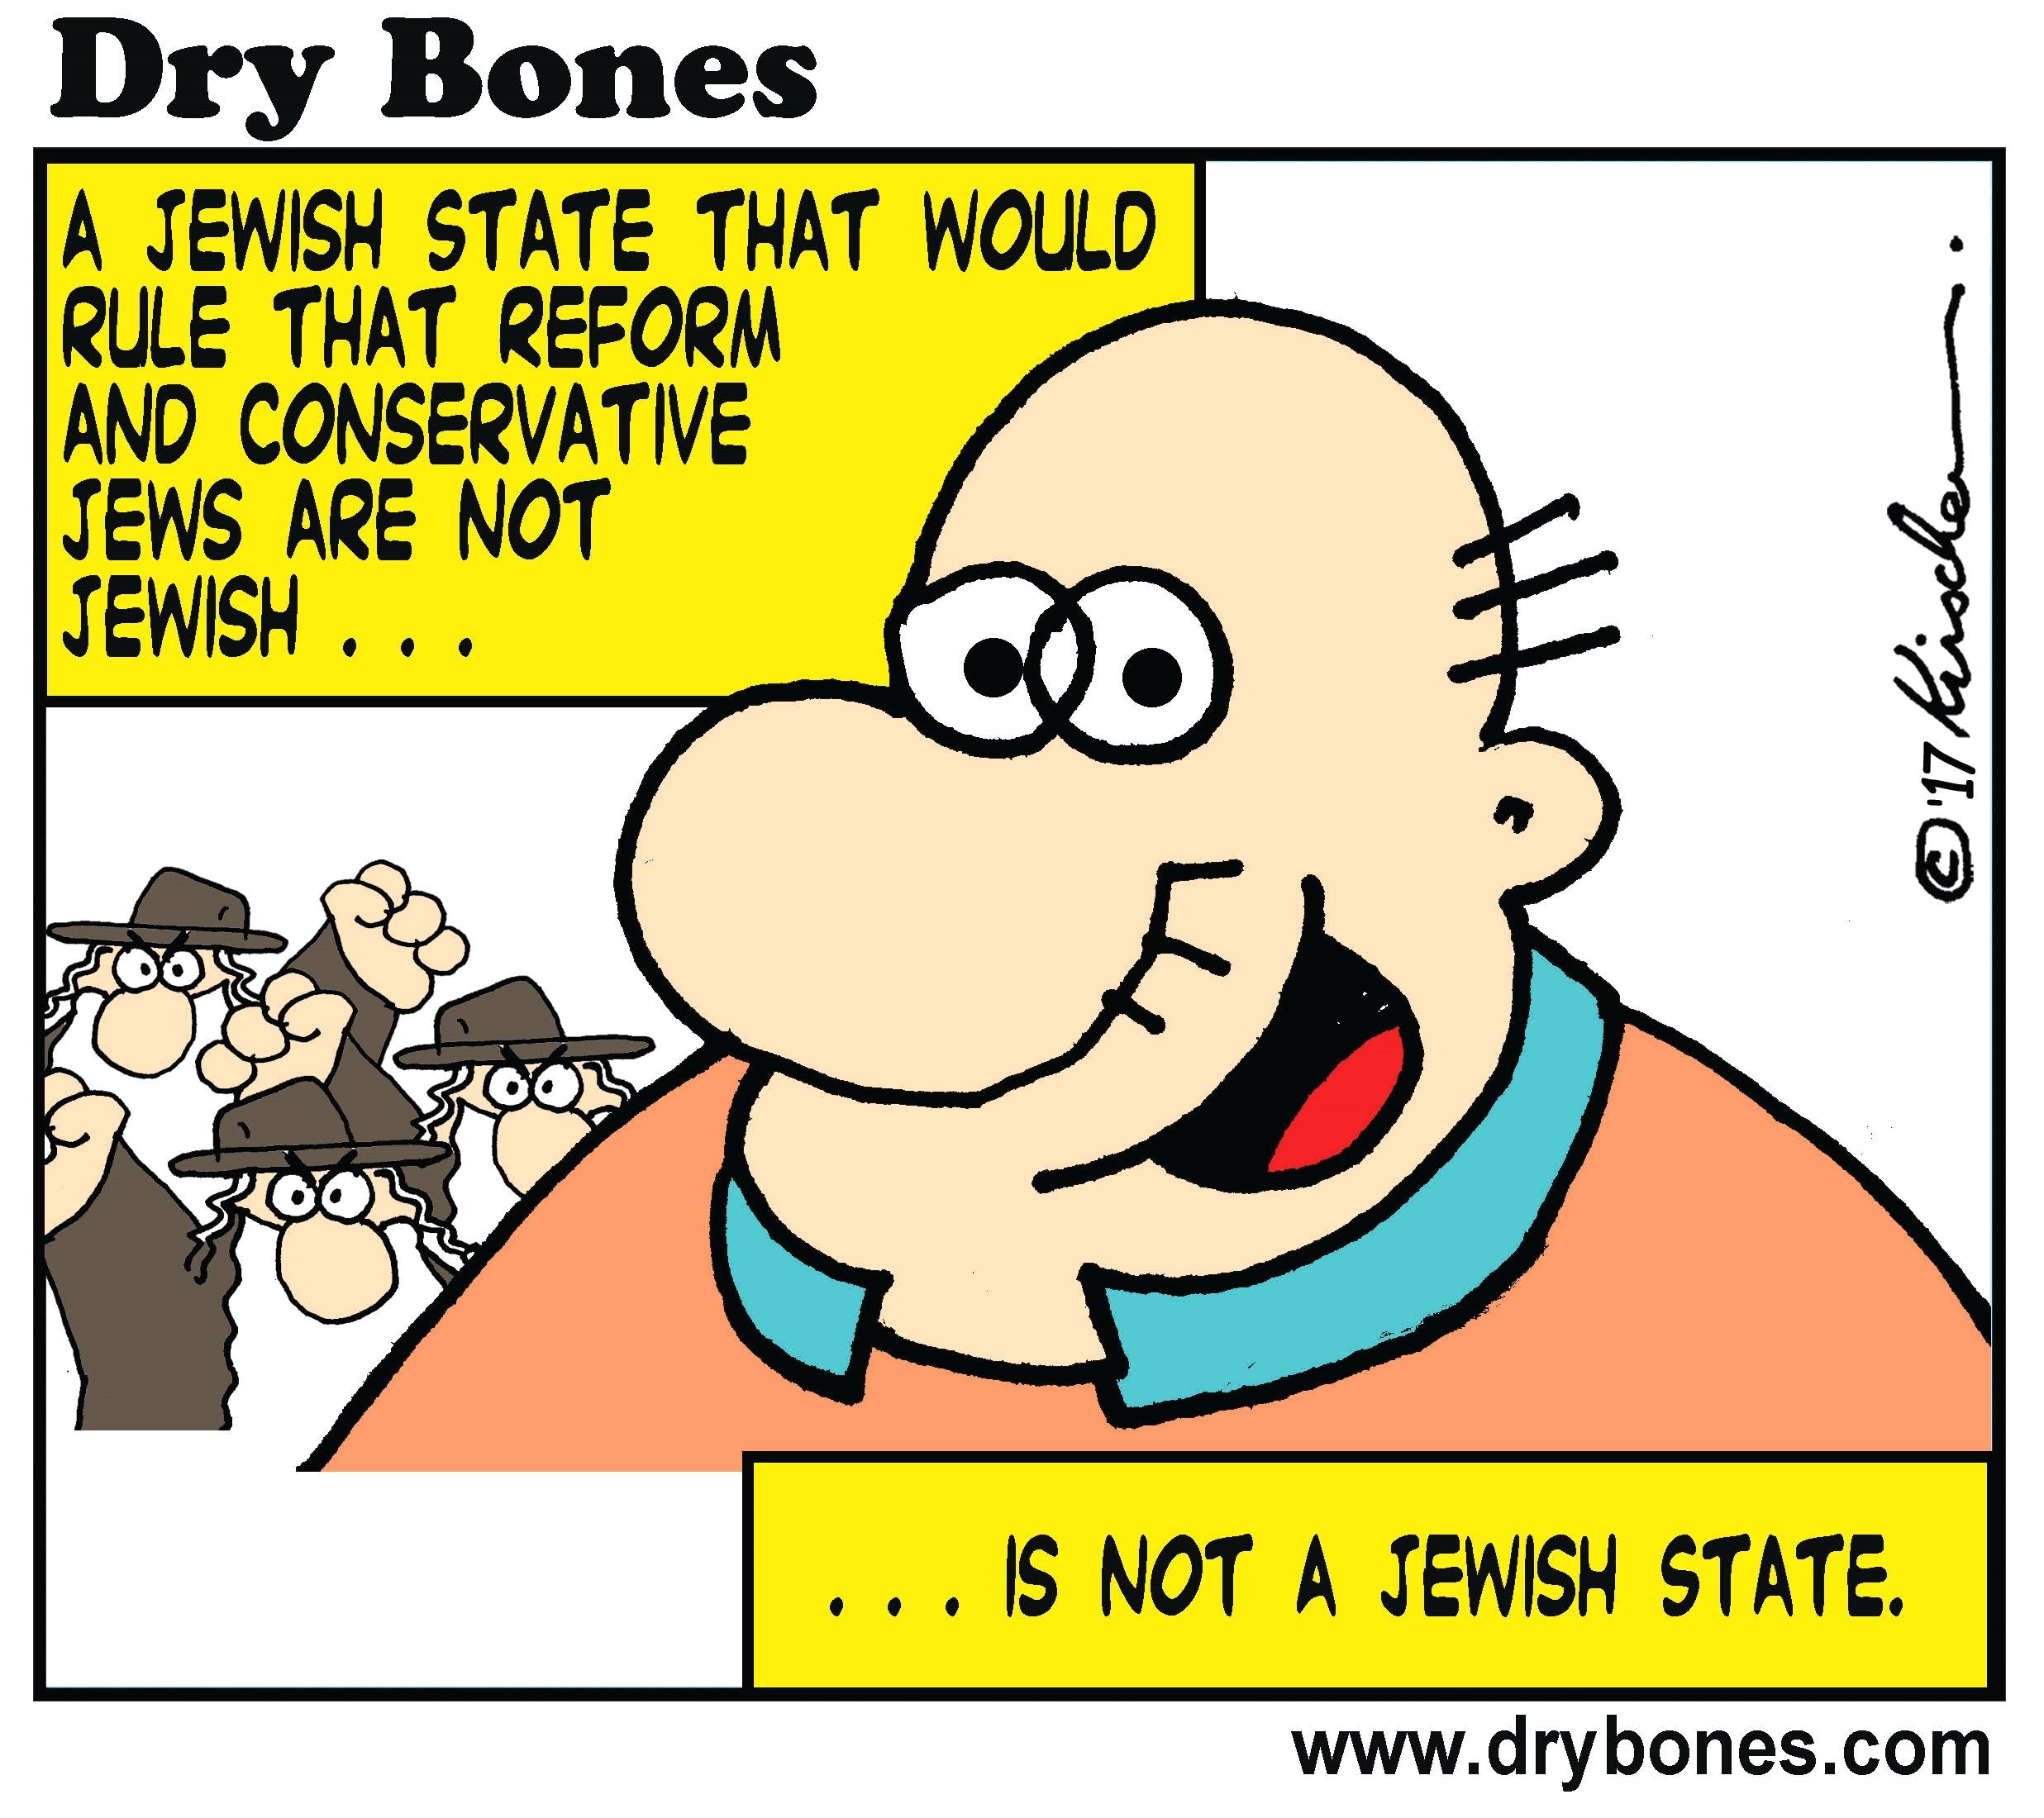 Dry Bones. Credit: Dry Bones